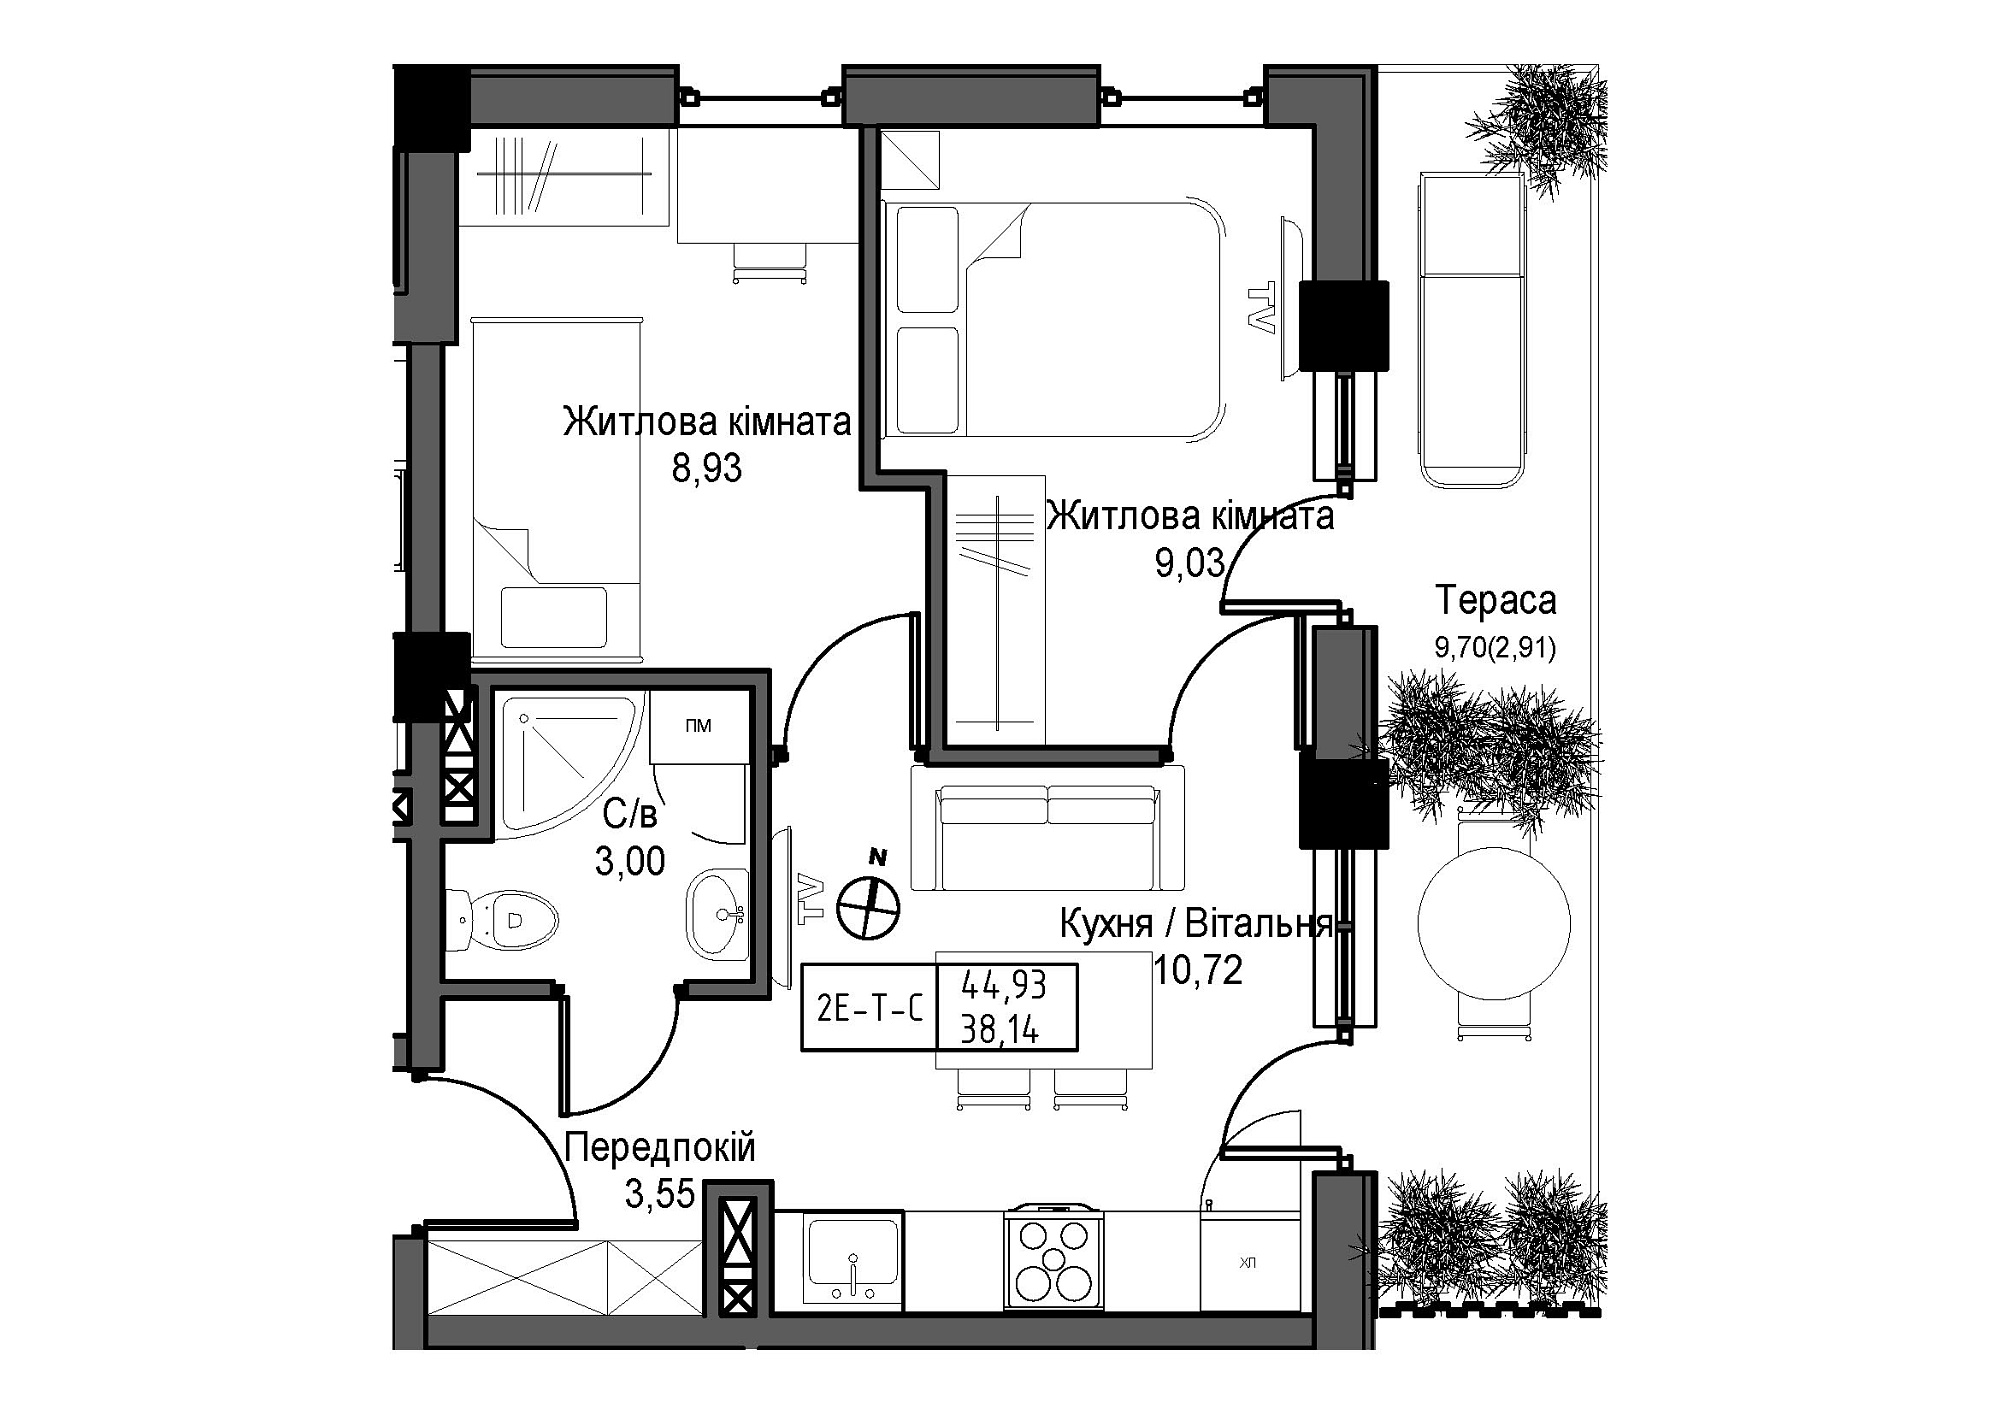 Planning 2-rm flats area 38.14m2, UM-007-06/0003.